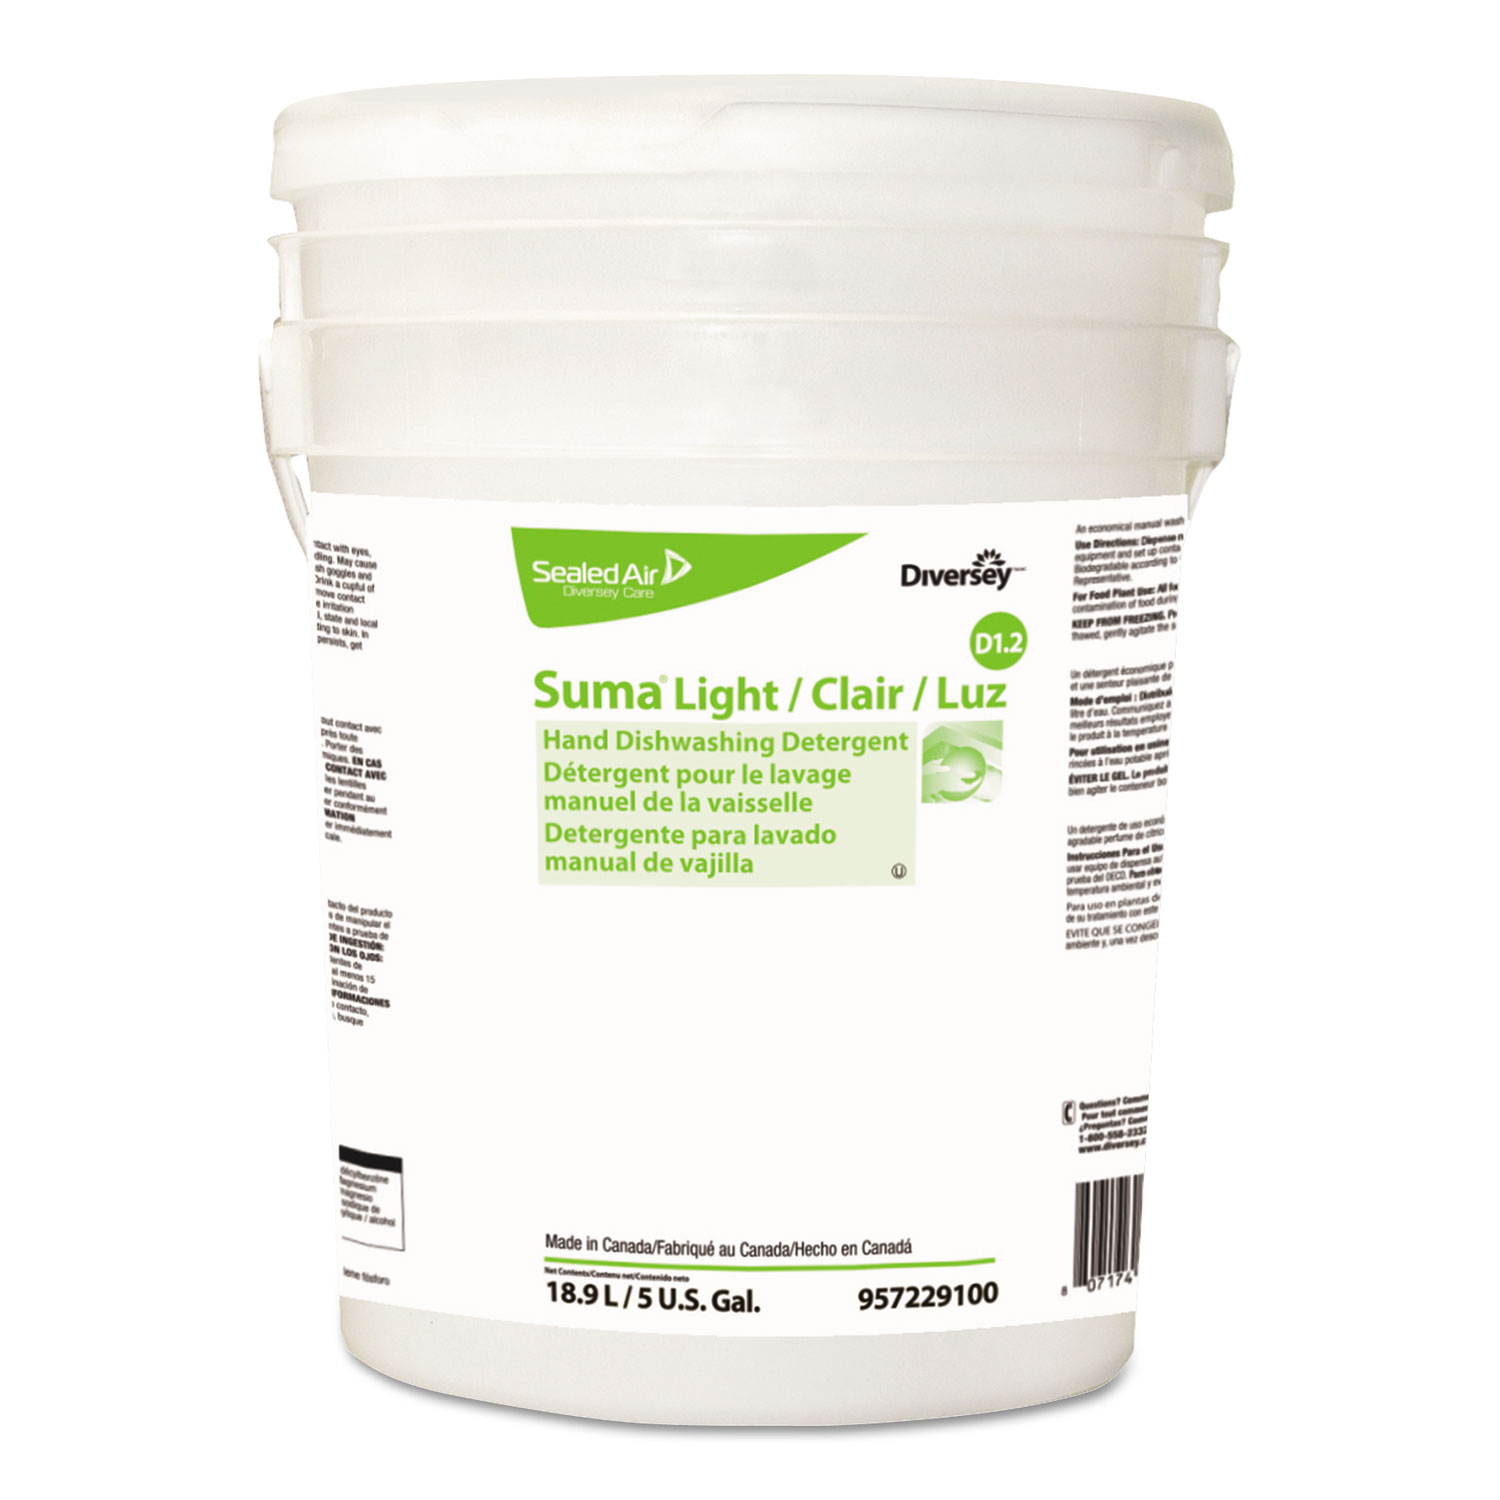  Diversey 957229100 Suma Light D1.2 Hand Dishwashing Detergent, Liquid, Citrus, 5 gal Pail (DVO957229100) 